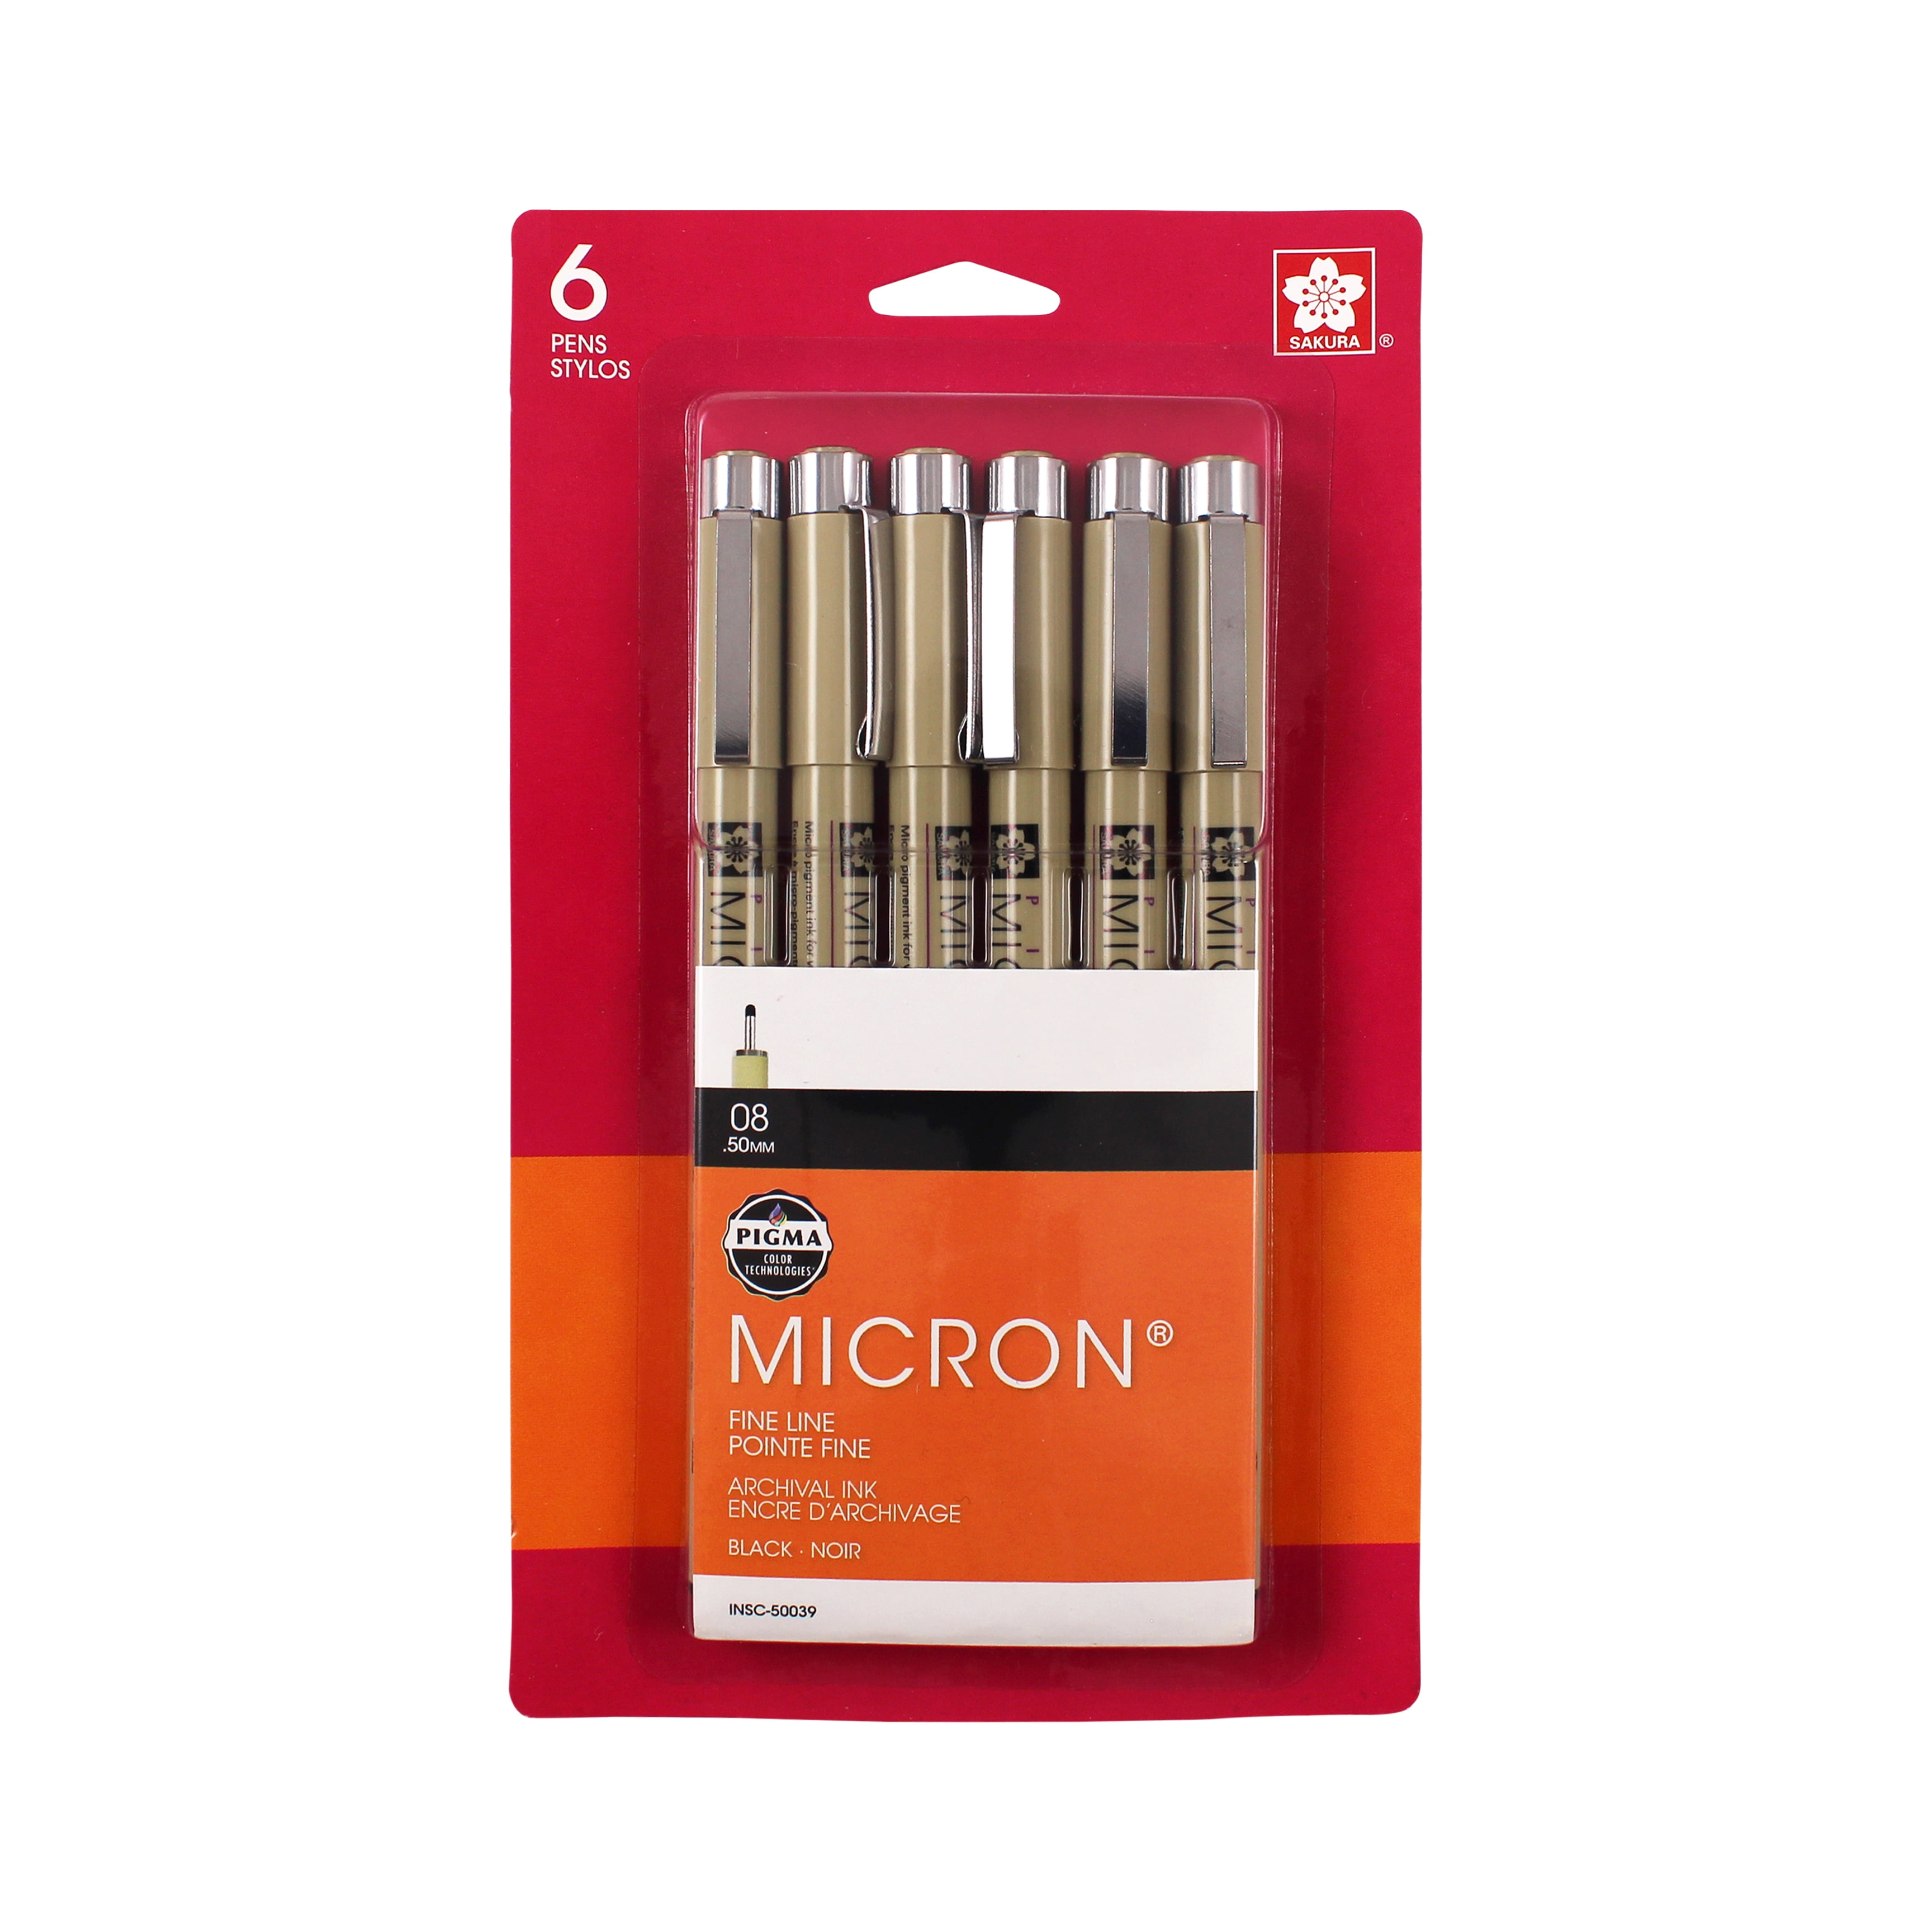 KINGART® PRO Fineliner Pens, 0.4mm Line Width, Triangular Ergonomic Barrel,  Set of 36 Unique Colors